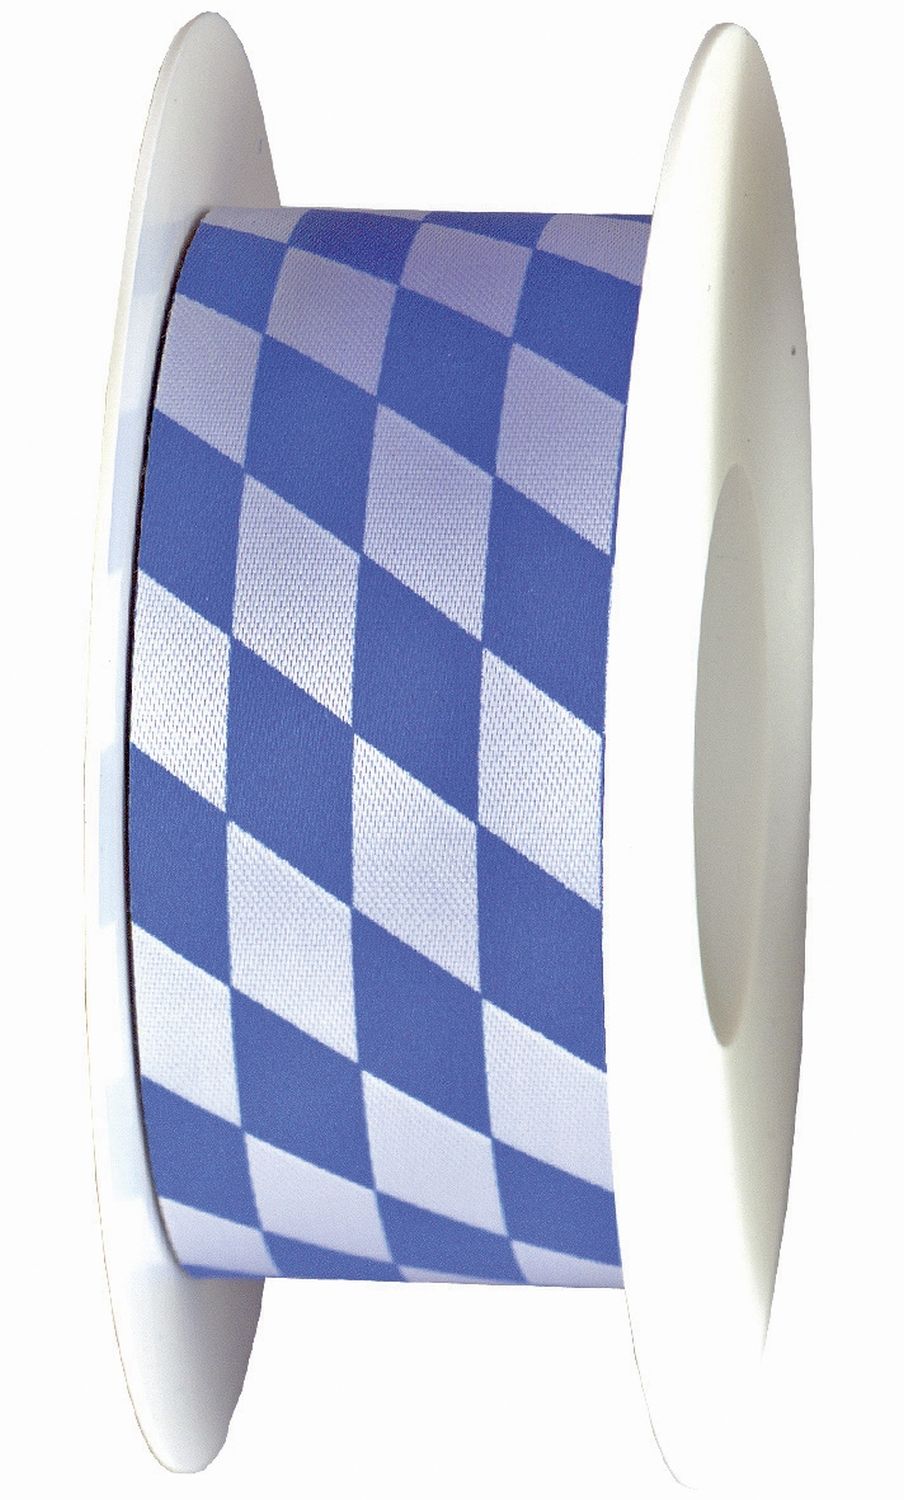 Zier Acetatband - 40 mm x 25 m, Raute, weiß/blau